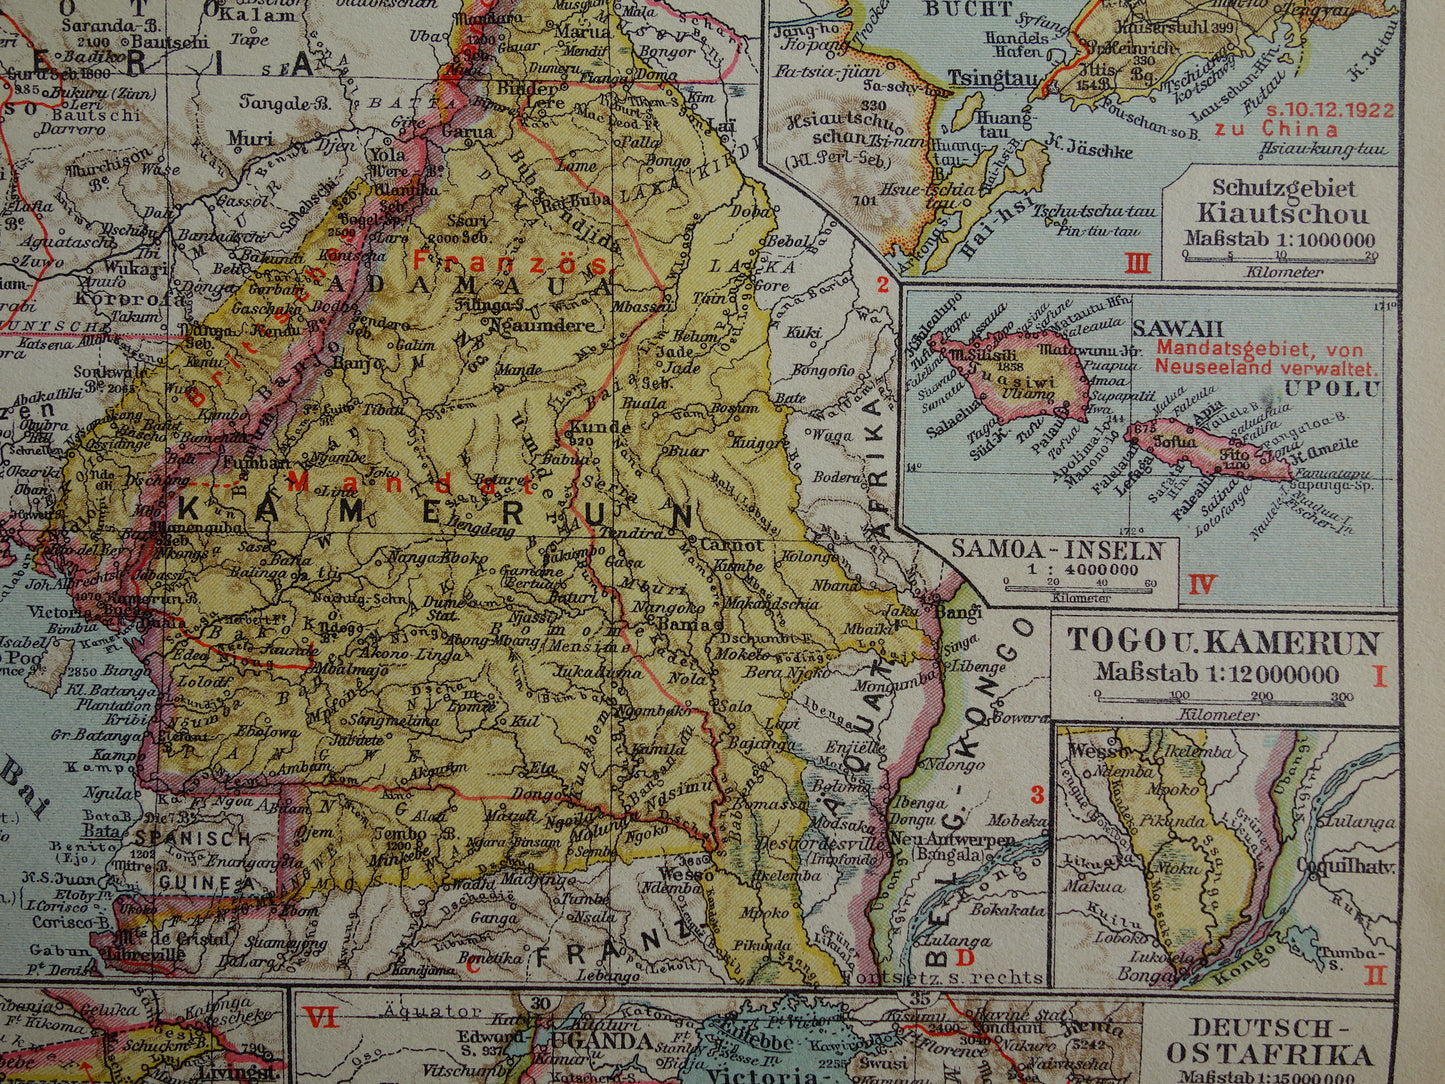 Duitse Koloniën oude landkaart Kamerun Togo Namibië Duits-Oostafrika Bismarck Archipel vintage kaarten